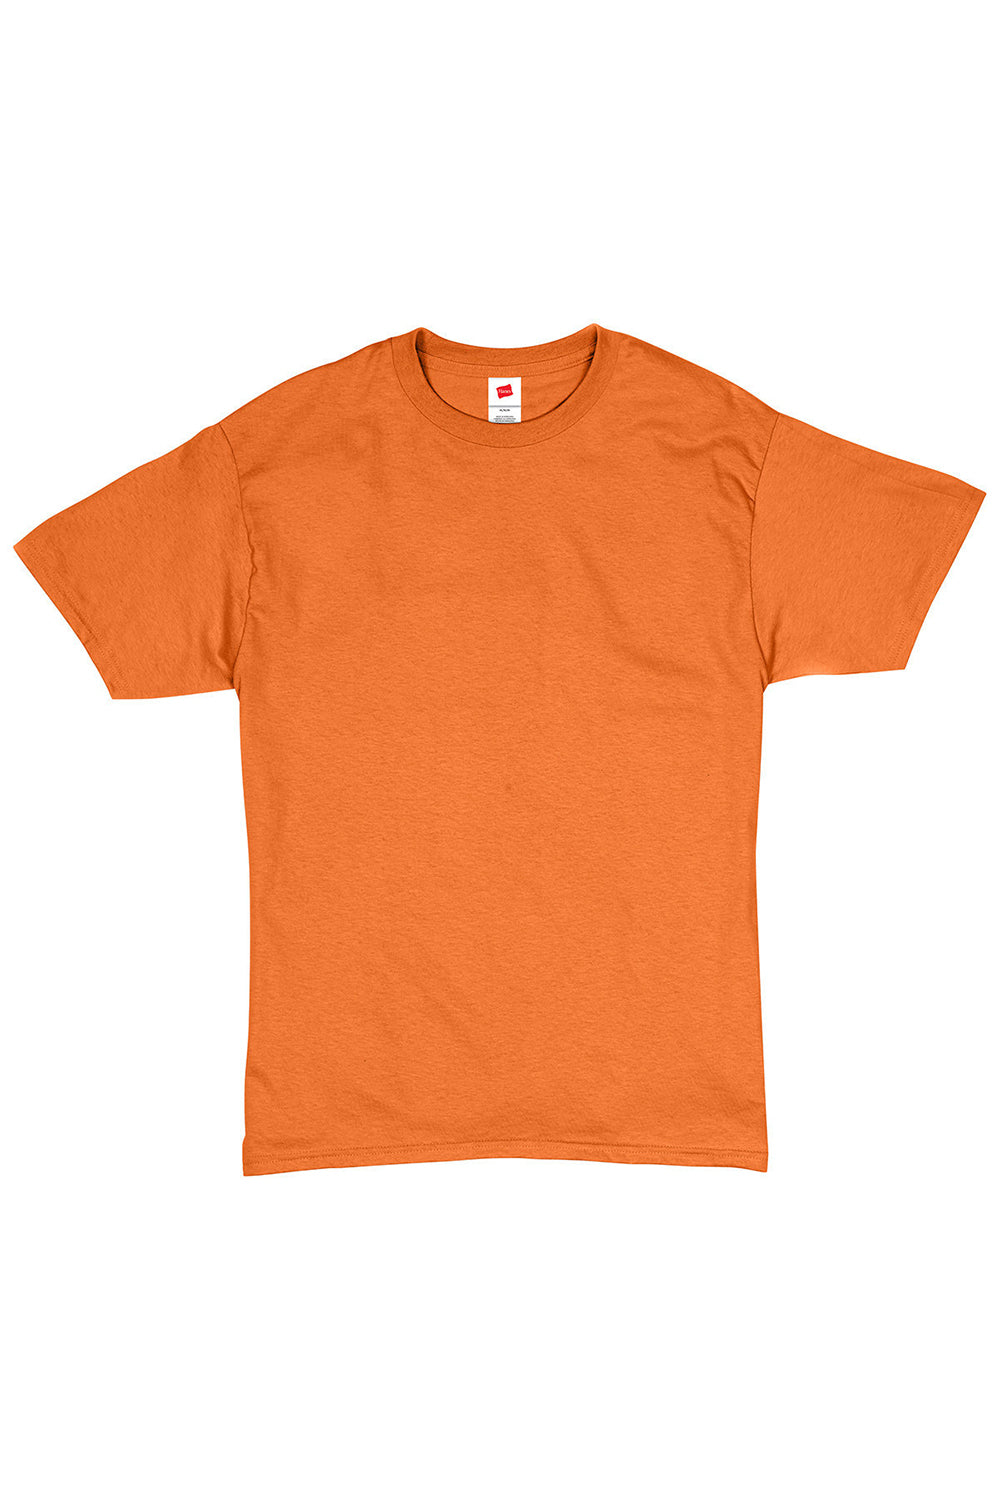 Hanes 5280 Mens ComfortSoft Short Sleeve Crewneck T-Shirt Safety Orange Flat Front